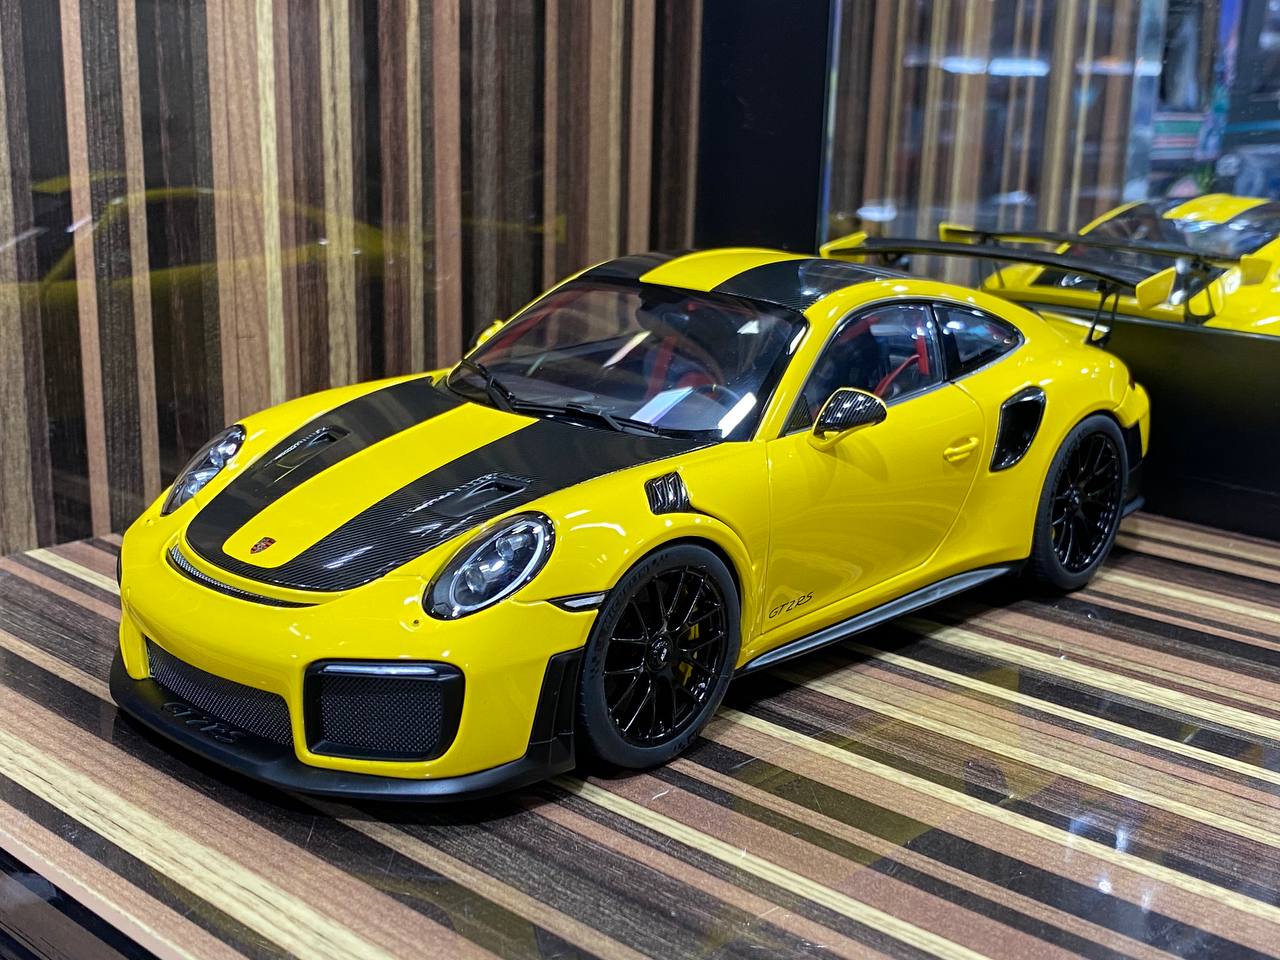 1/18 Diecast Porsche 911 GT2 RS Yellow AUTOart Scale Model Car|Sold in Dturman.com Dubai UAE.